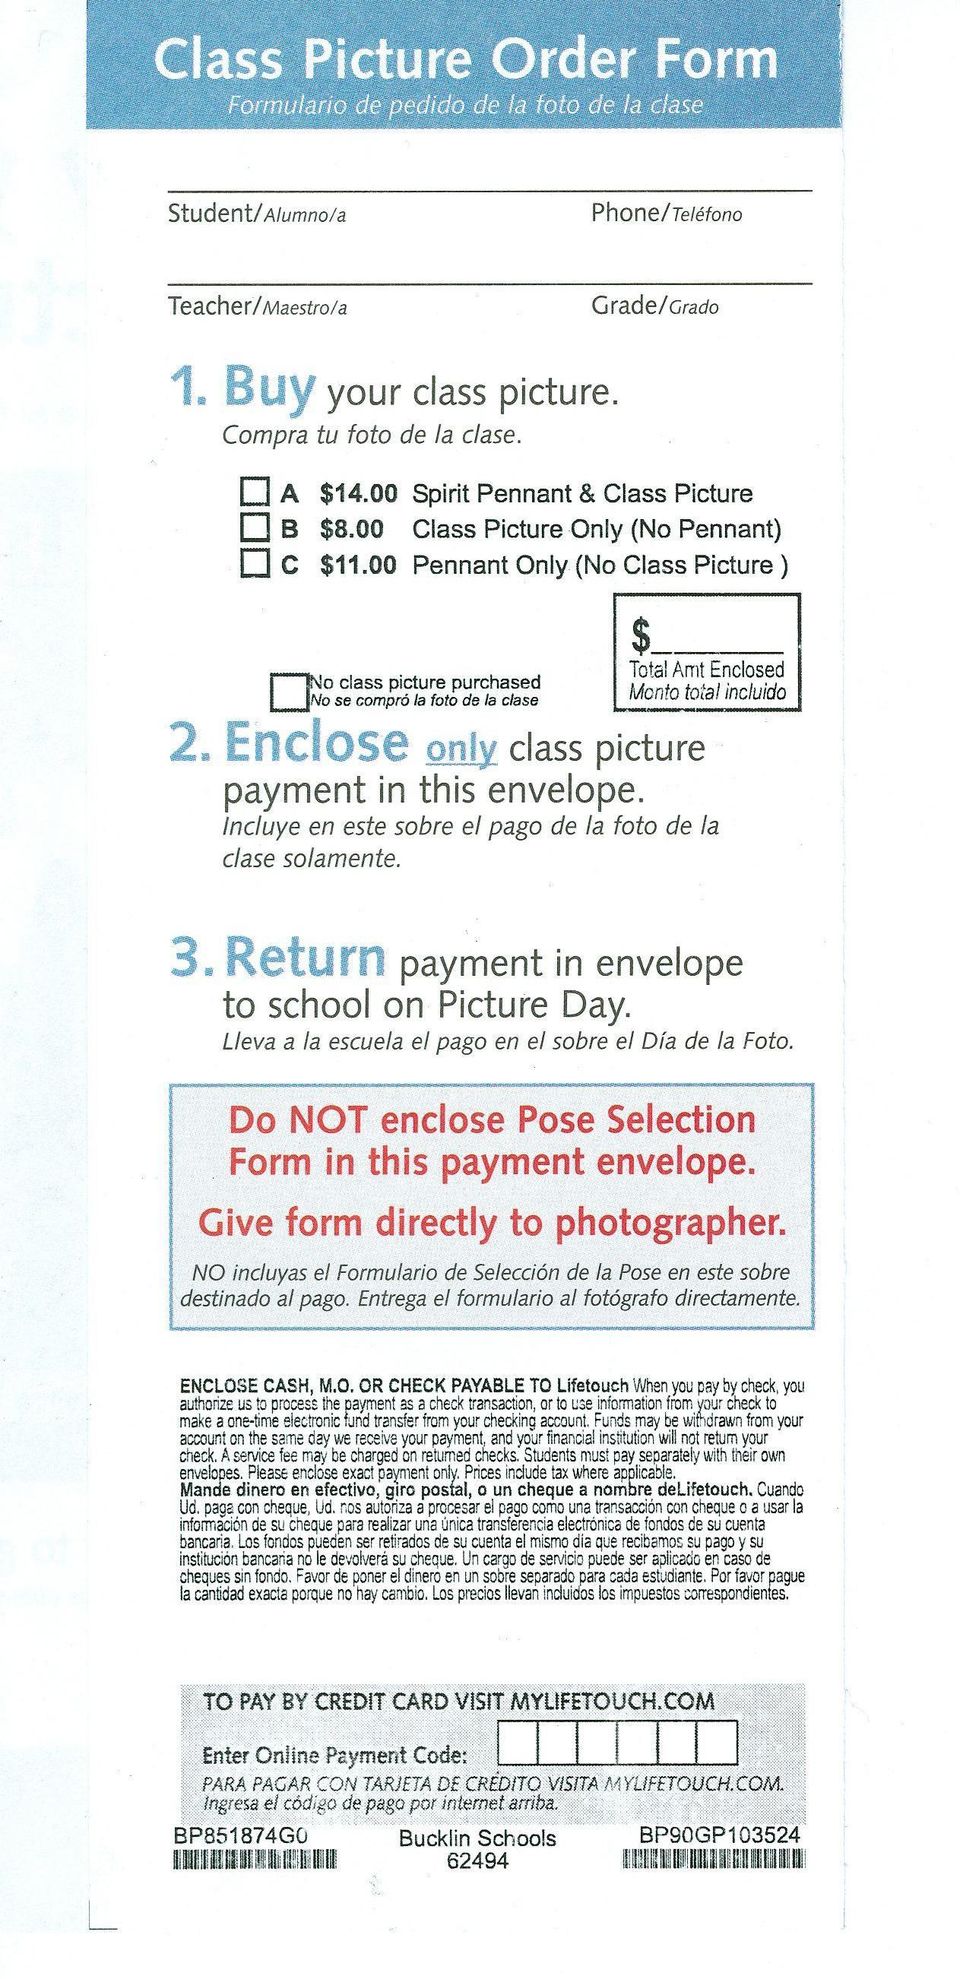 Enclose only class picture payment in this envelope. fncluye en este sabre ef pago de fa foto de fa clase sofamente. $ Total Am! Enclosed Monto tolal incluido ------- 3.